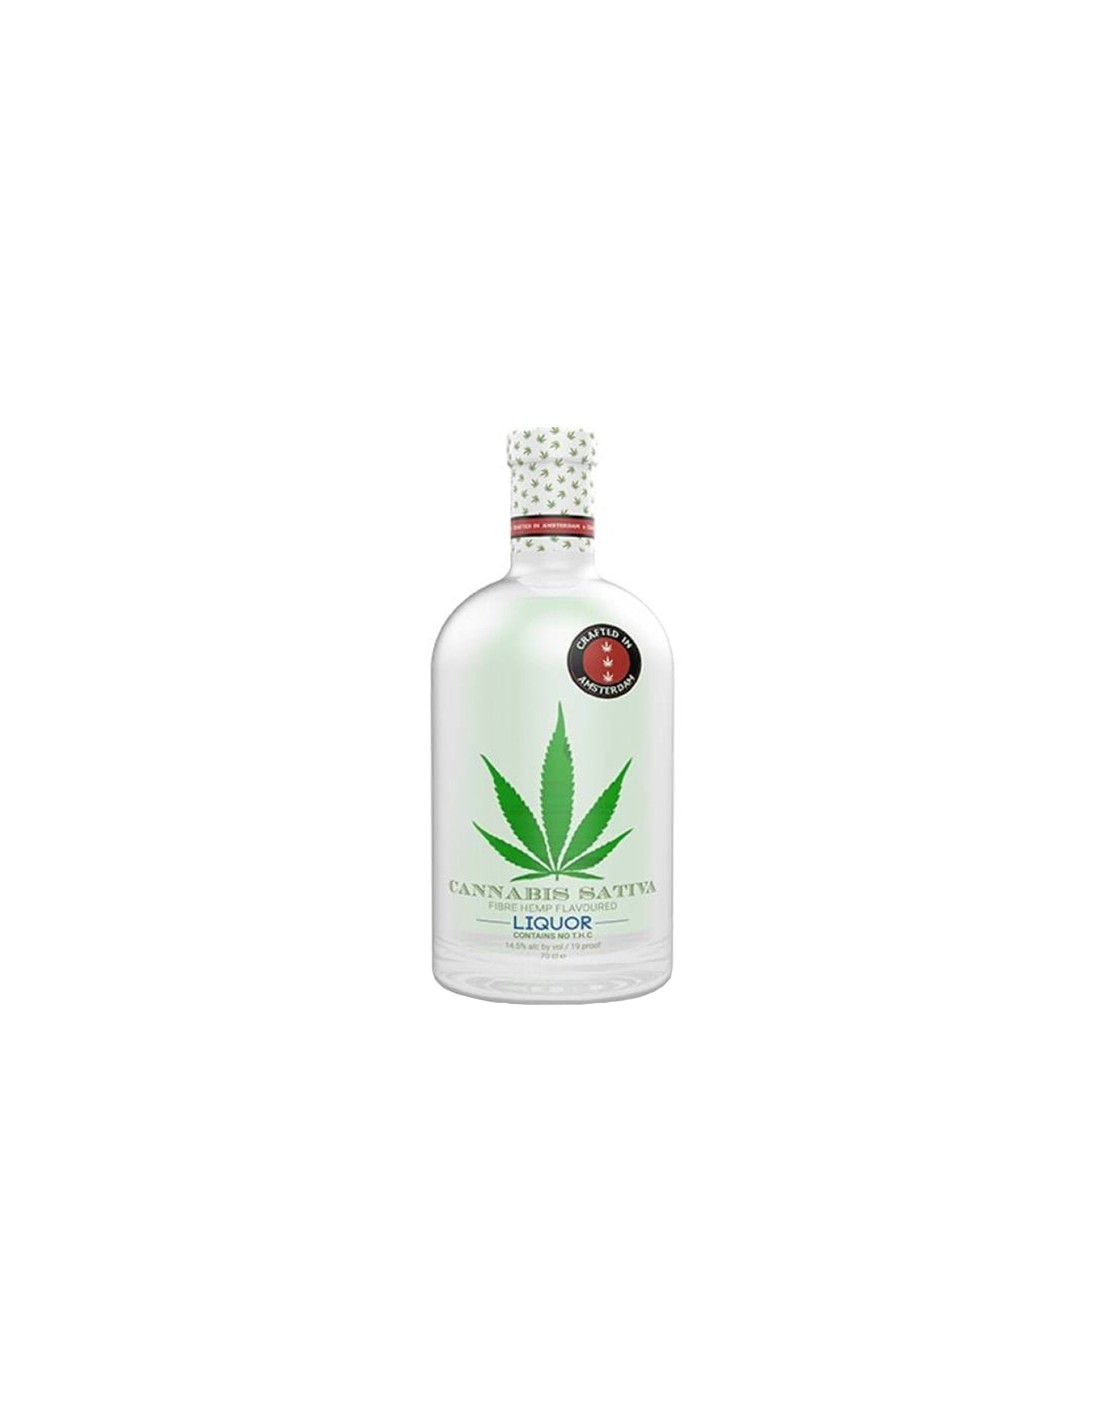 Lichior Cannabis Sativca Liquor 0.7l